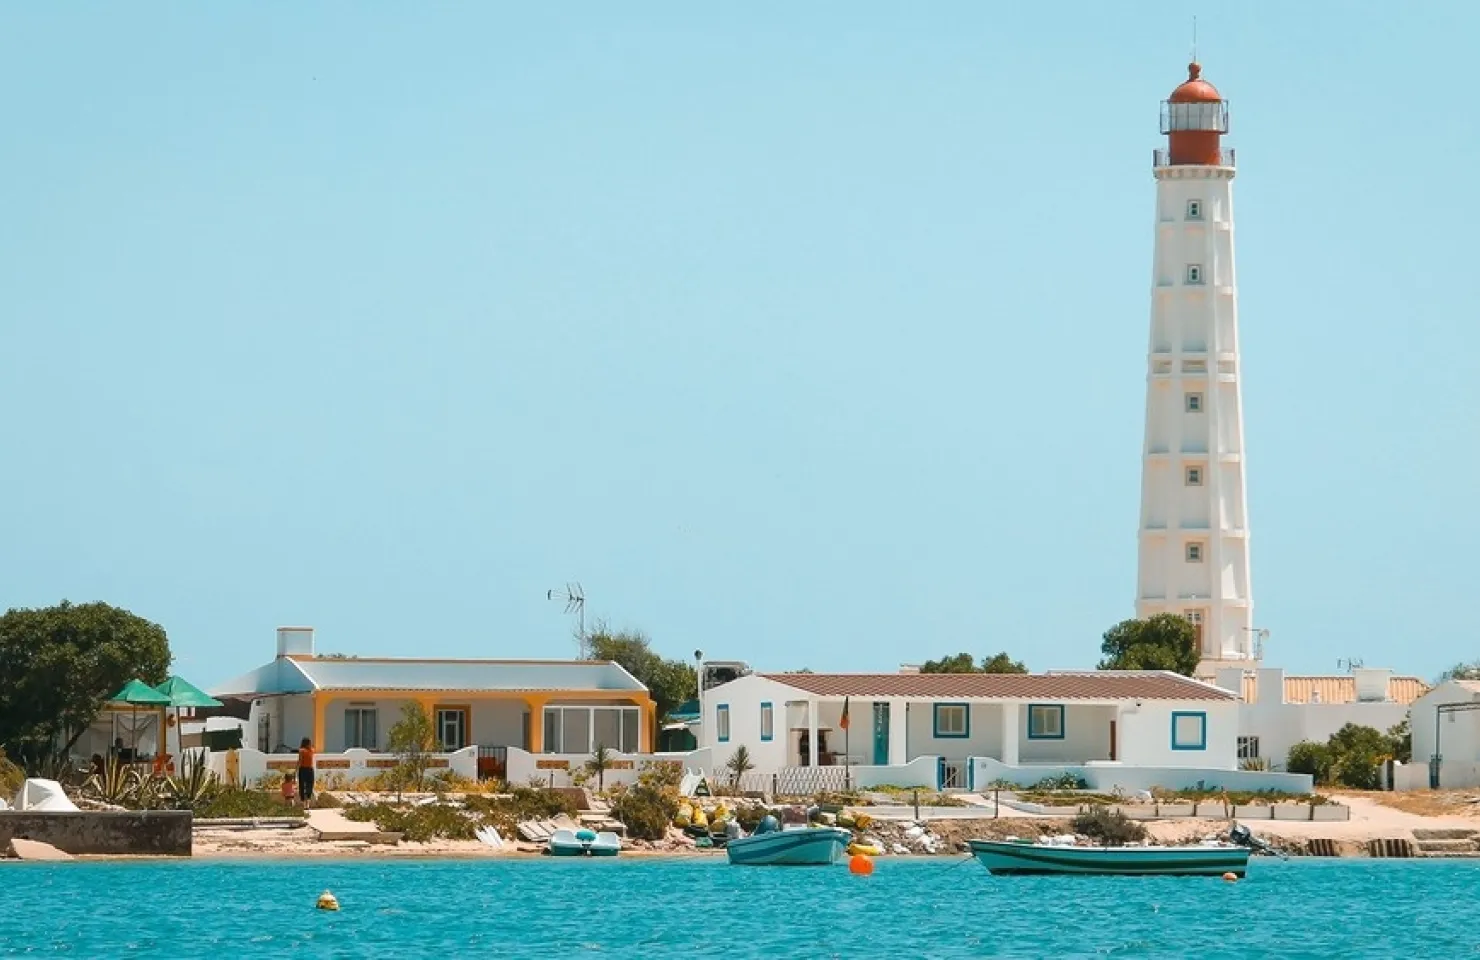 Aqua Taxi Farol Island - Algarve Boat Trips and tours